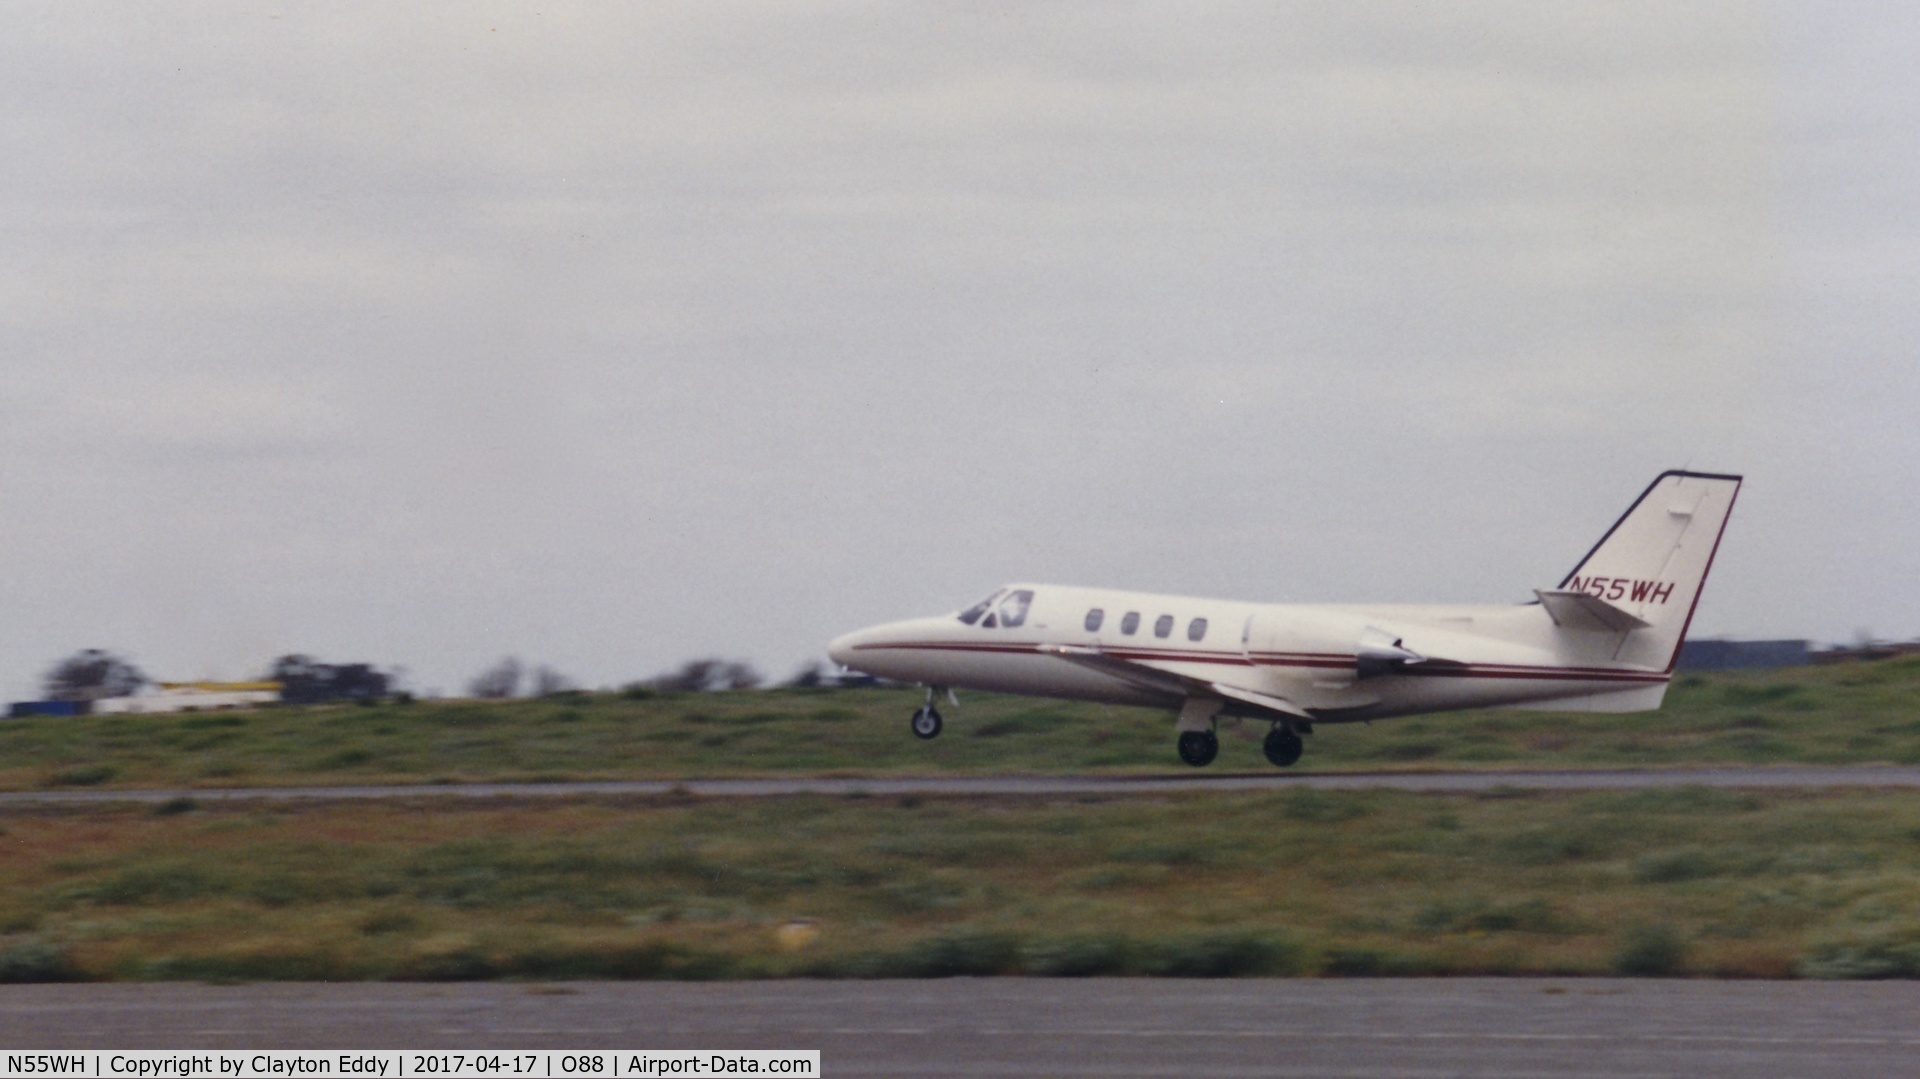 N55WH, Cessna Citation C/N 0000, Citation departing runway at the old Rio Vista Airport California 1980's?